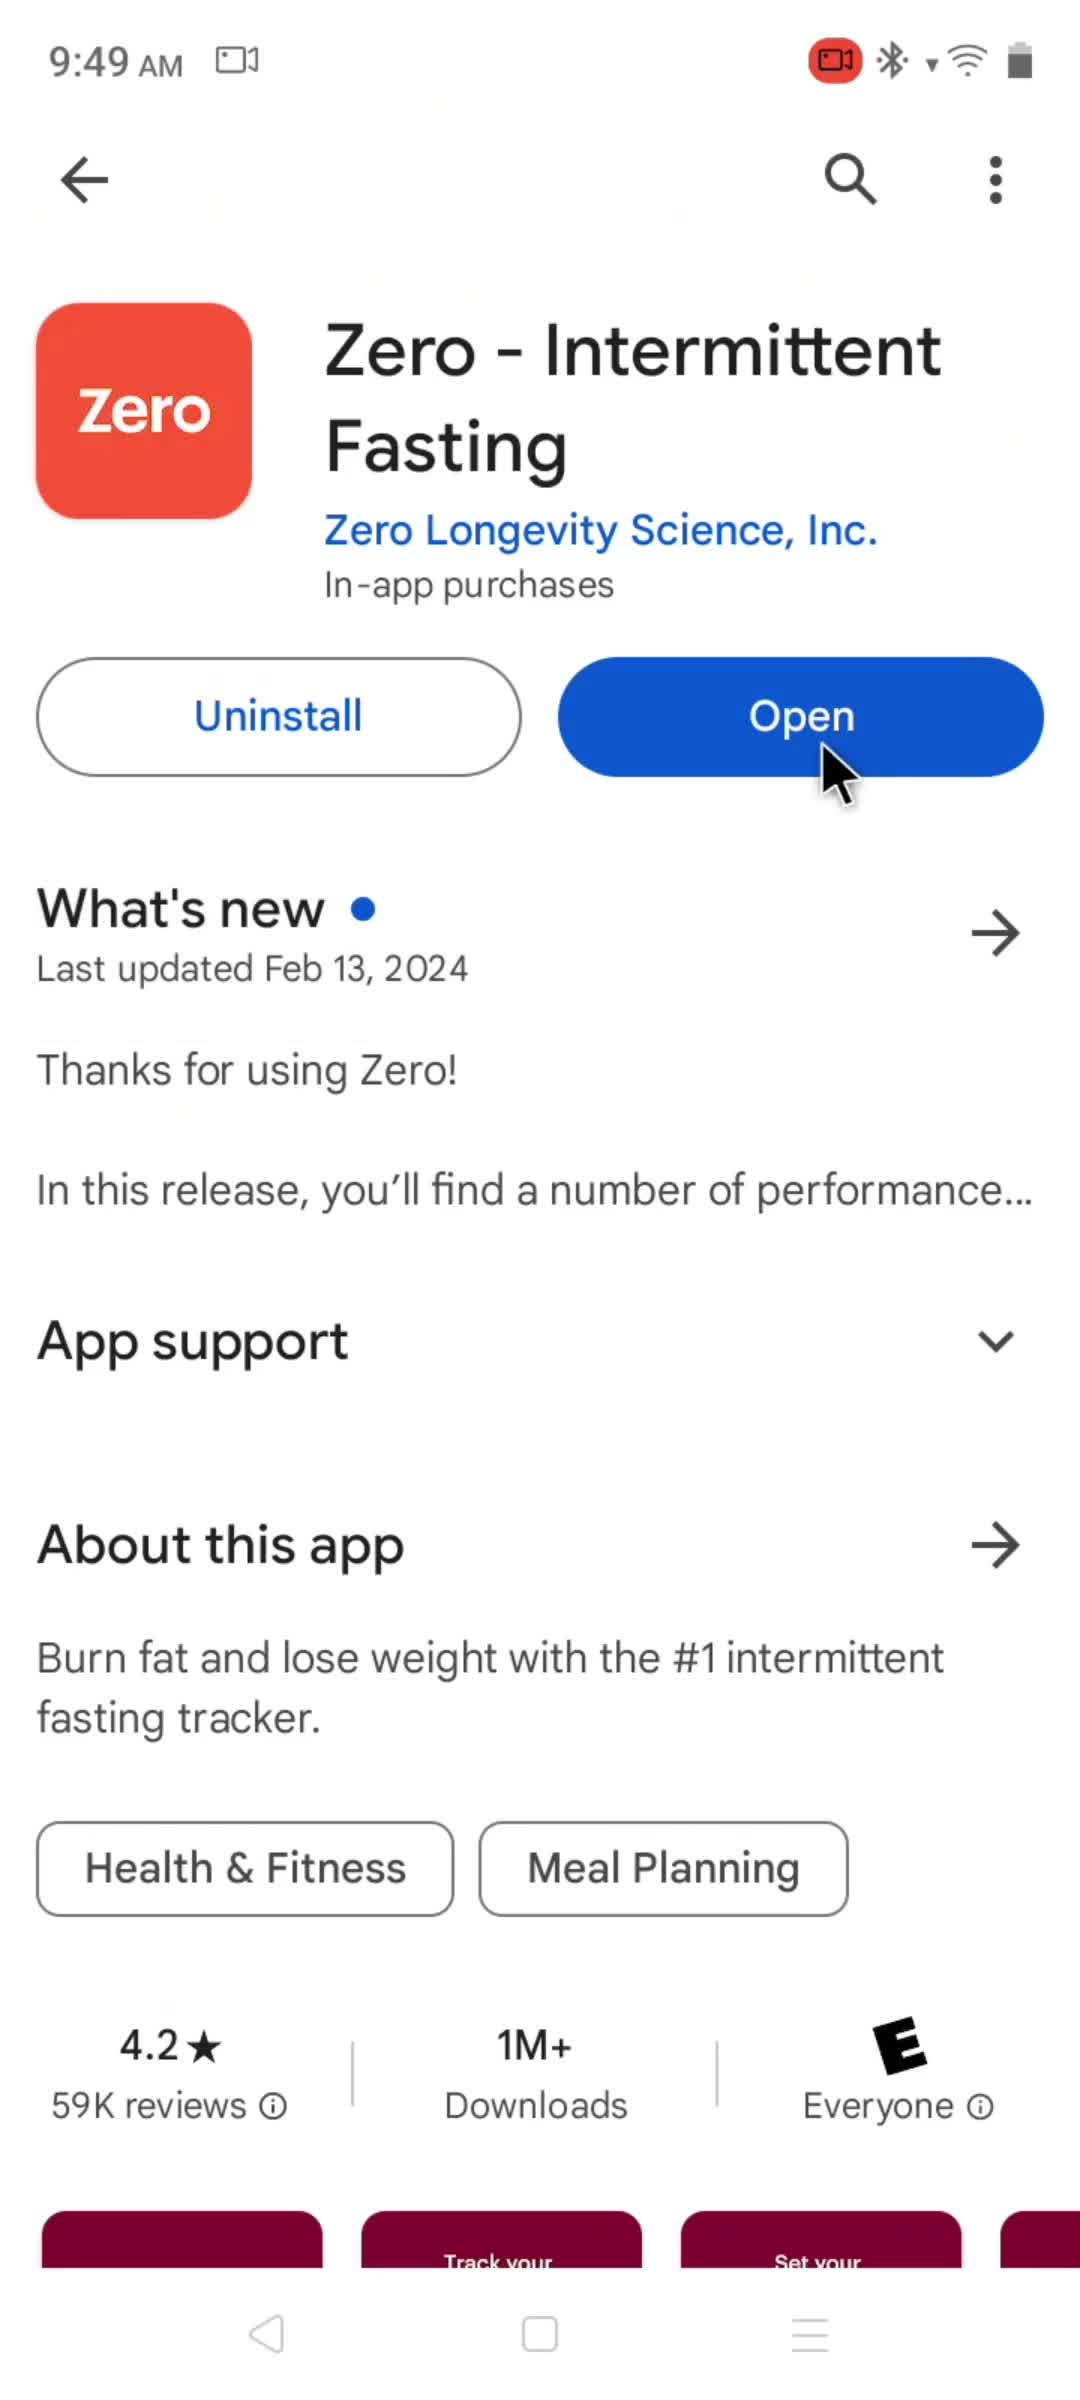 Zero app store listing screenshot